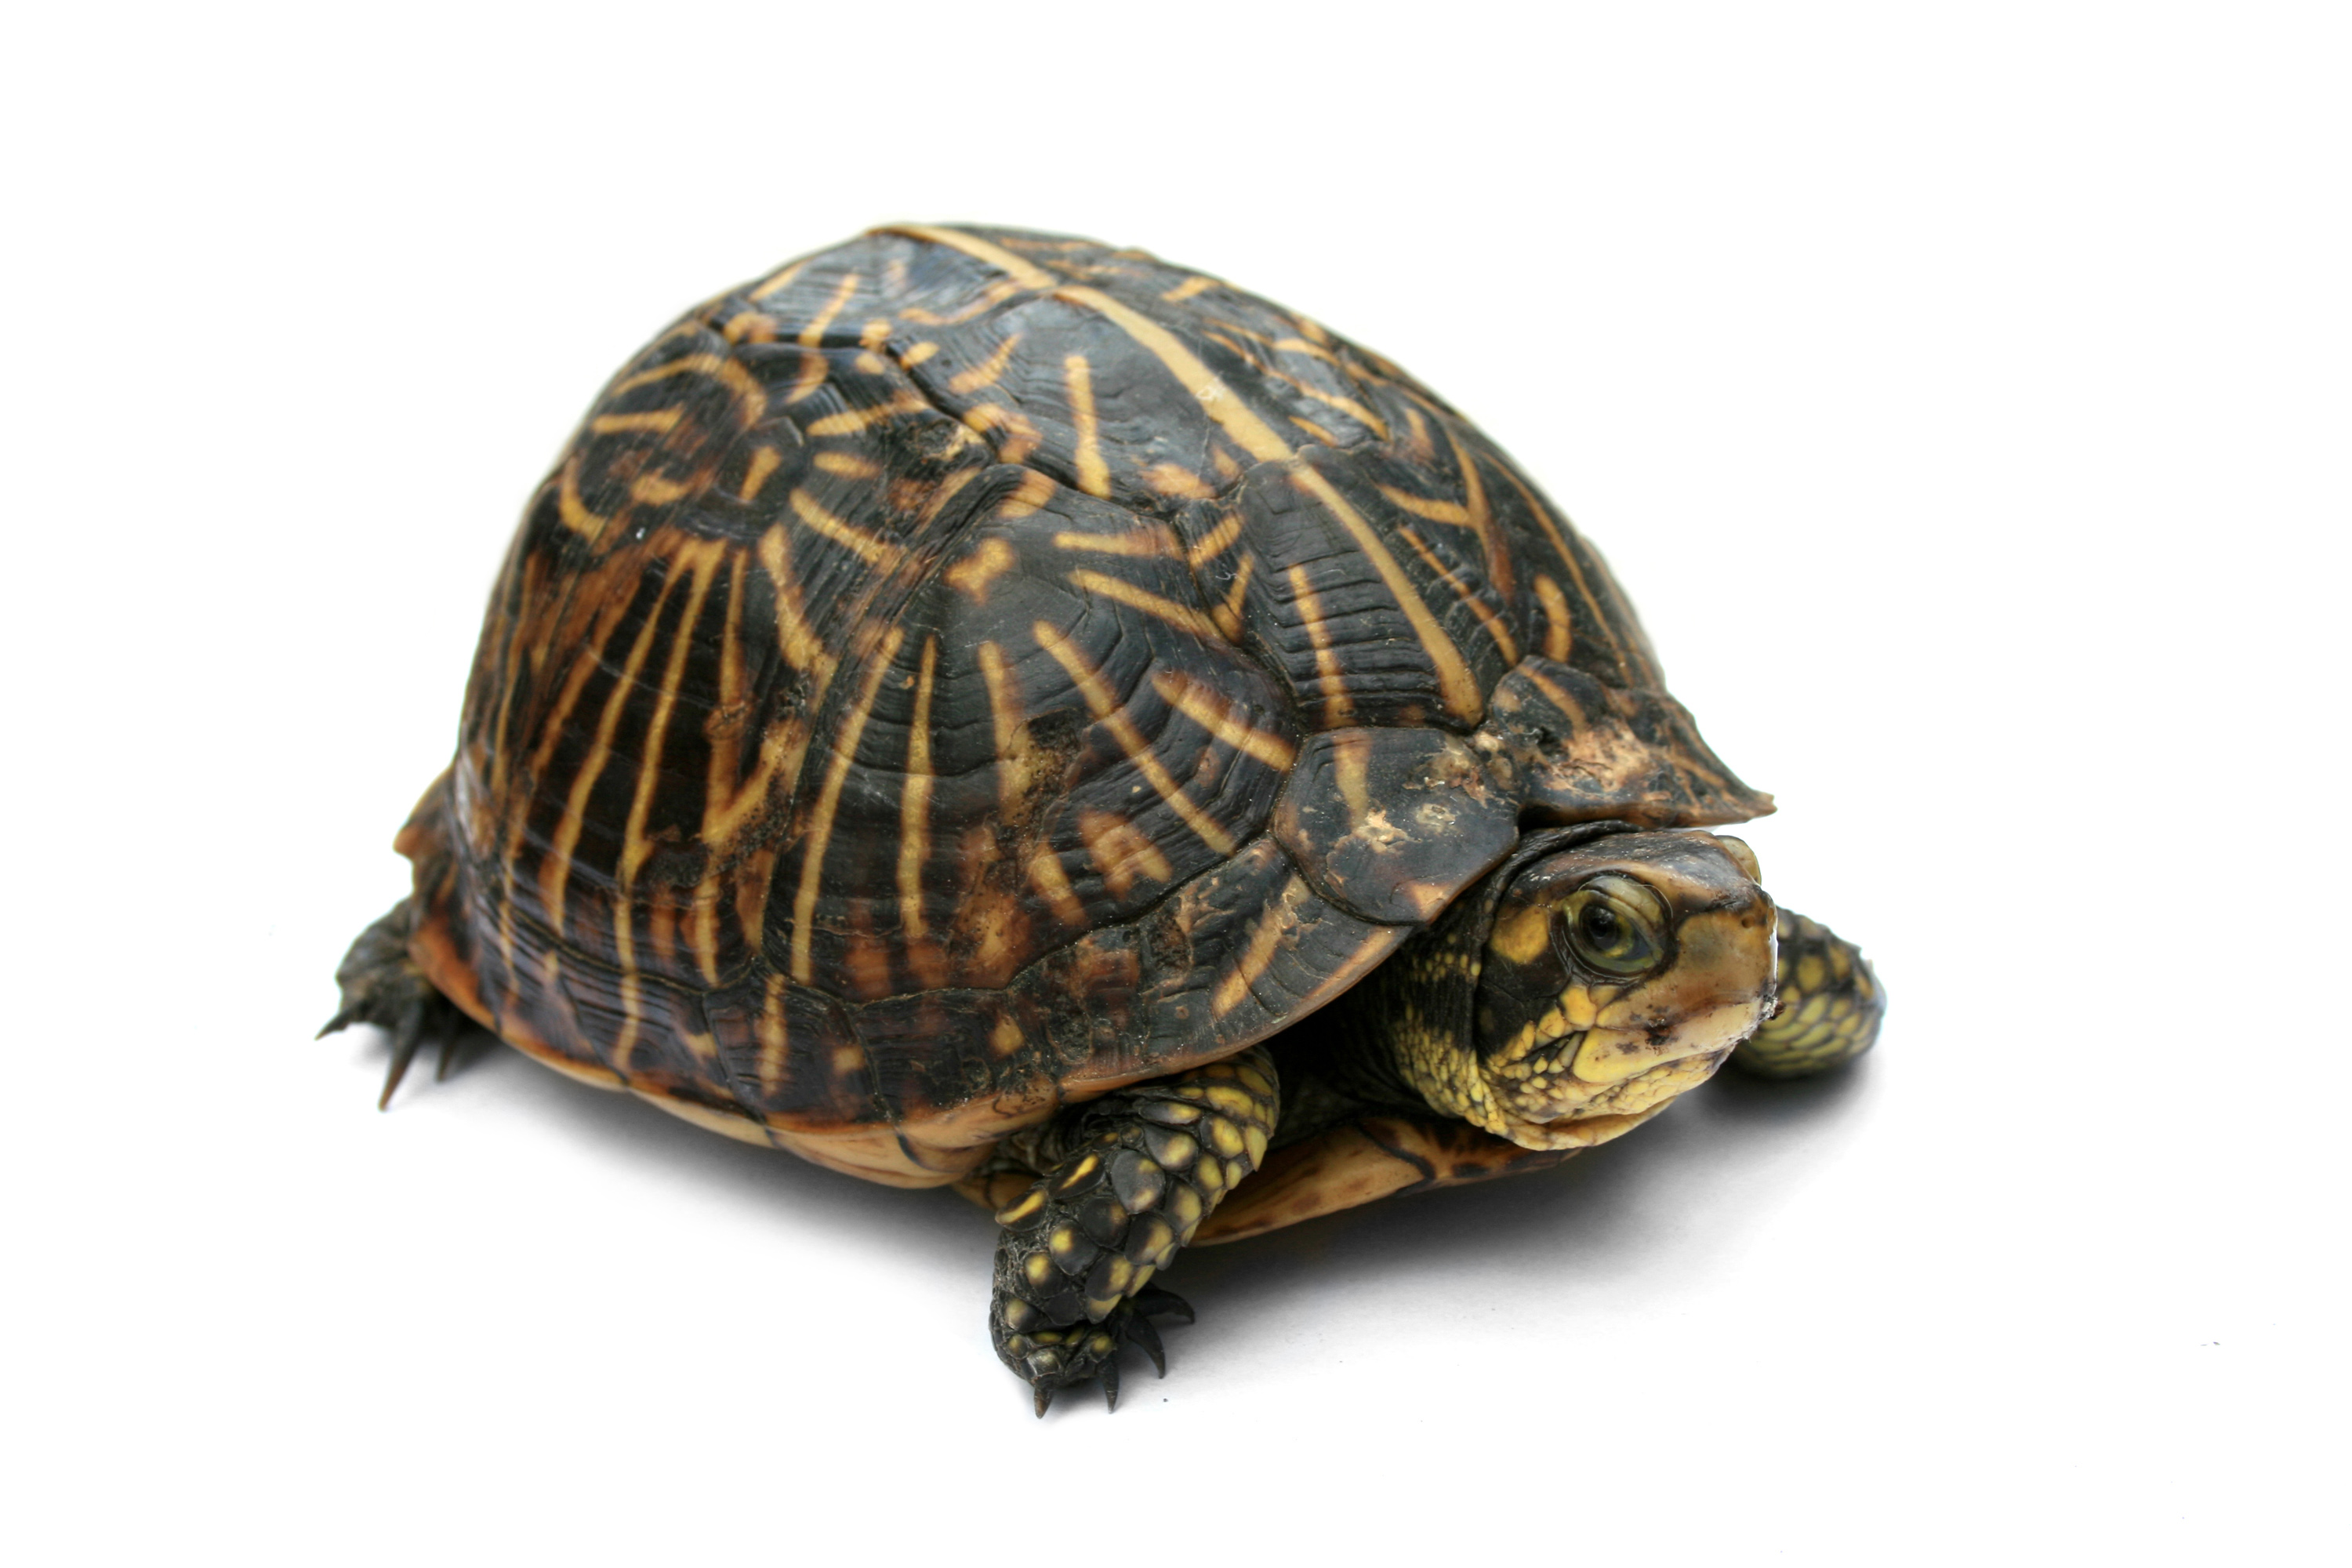 FileFlorida Box Turtle Digon3.jpg Wikimedia Commons